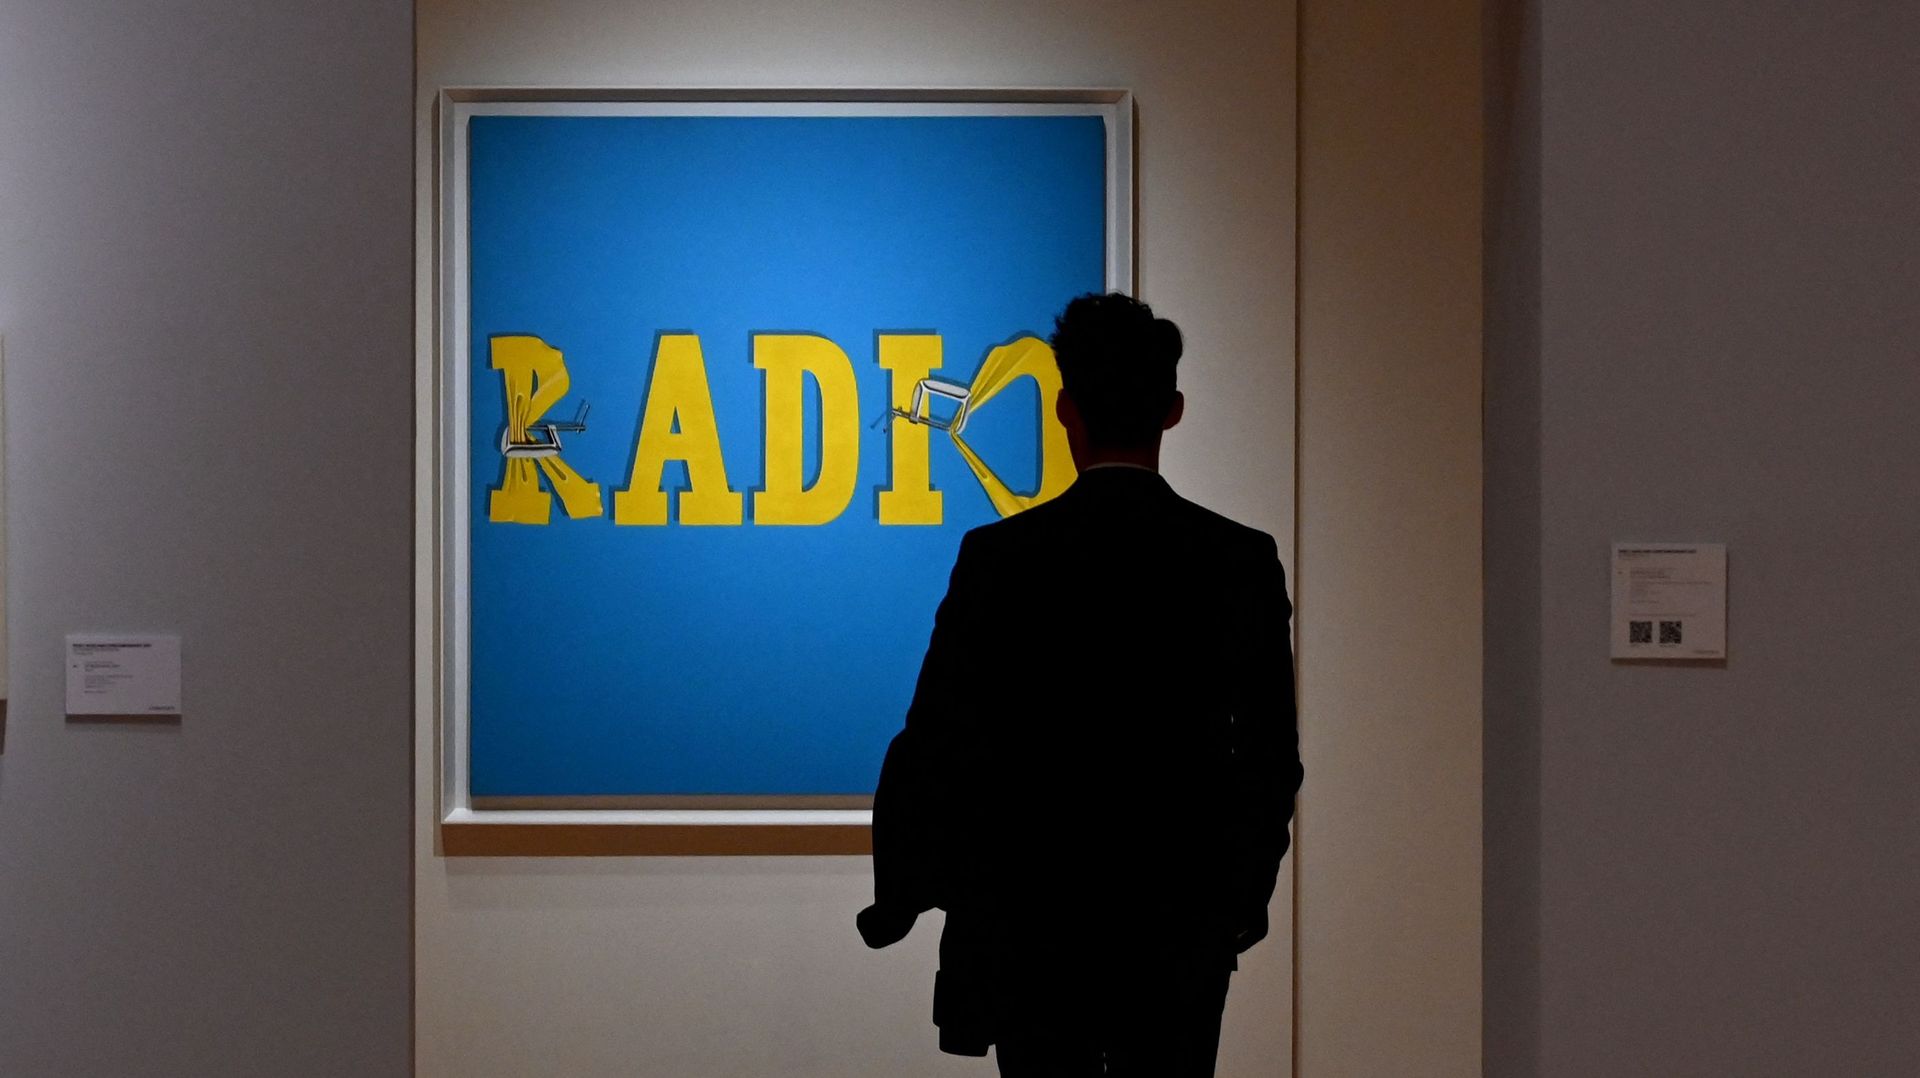 L'œuvre Hurting the Word Radio d'Ed Ruscha en 2019 lors de sa vente chez Christie's